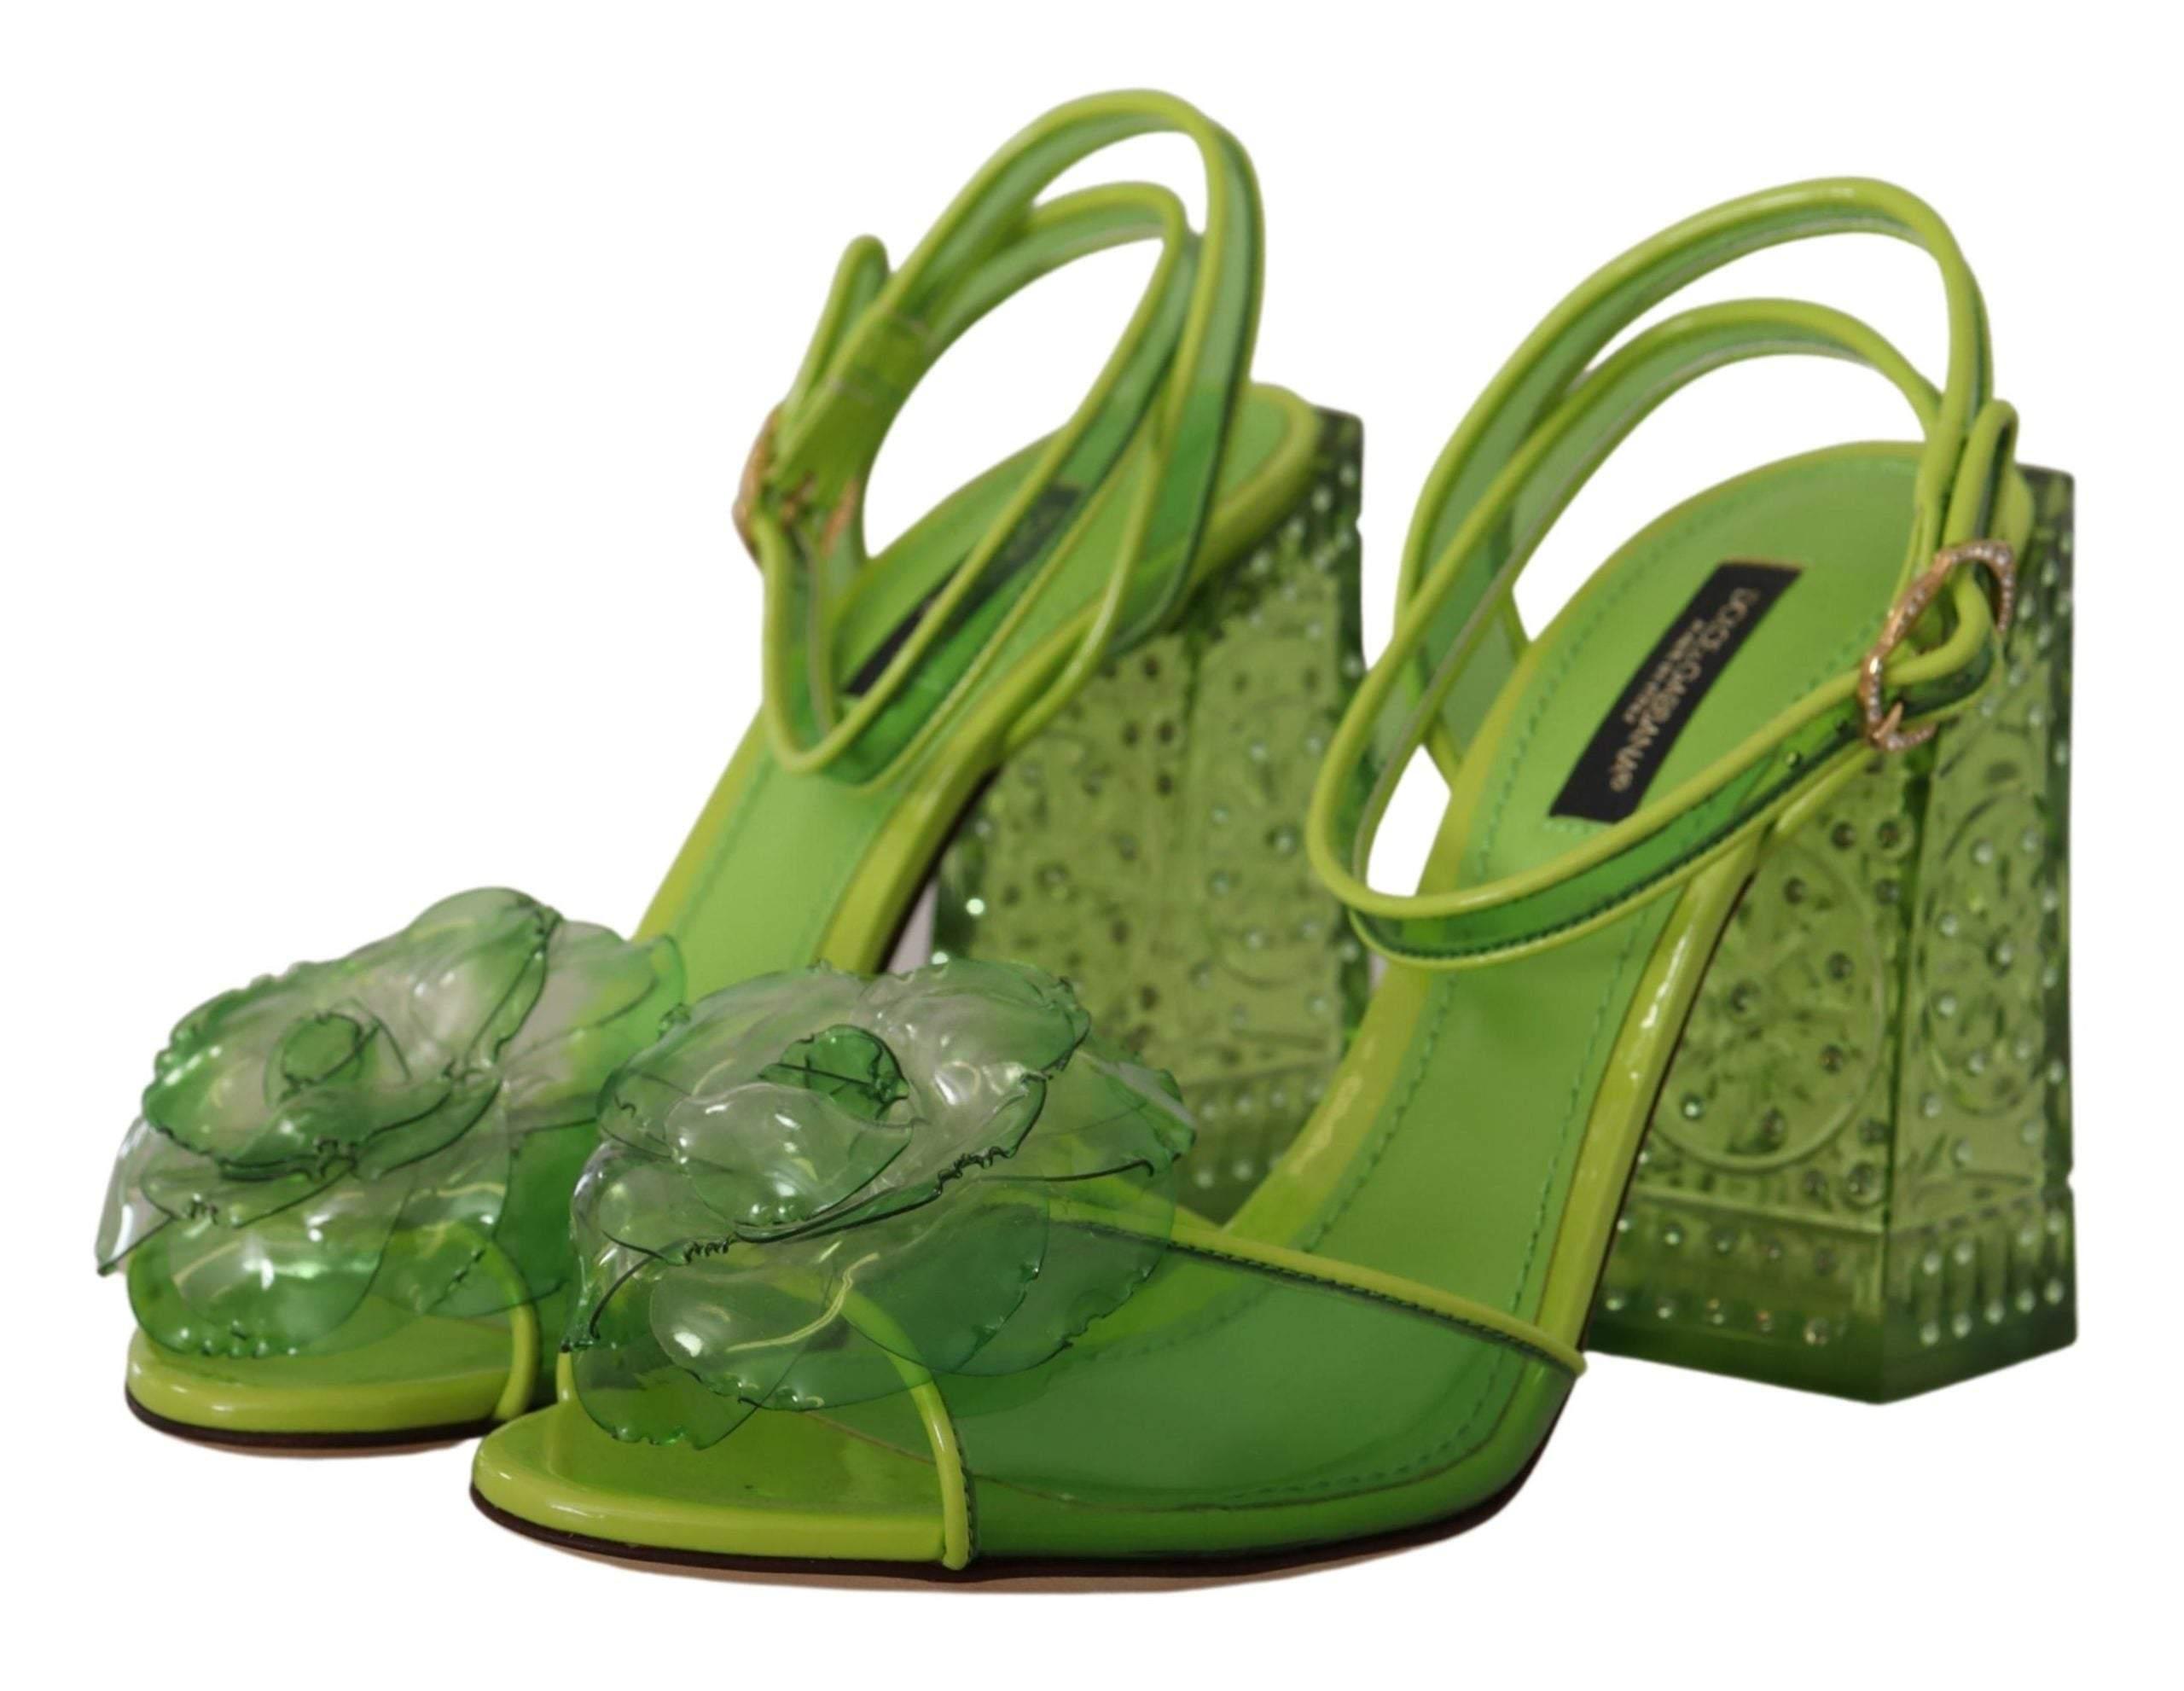 Women's shoes: pumps, sneakers, boots | Dolce&Gabbana®